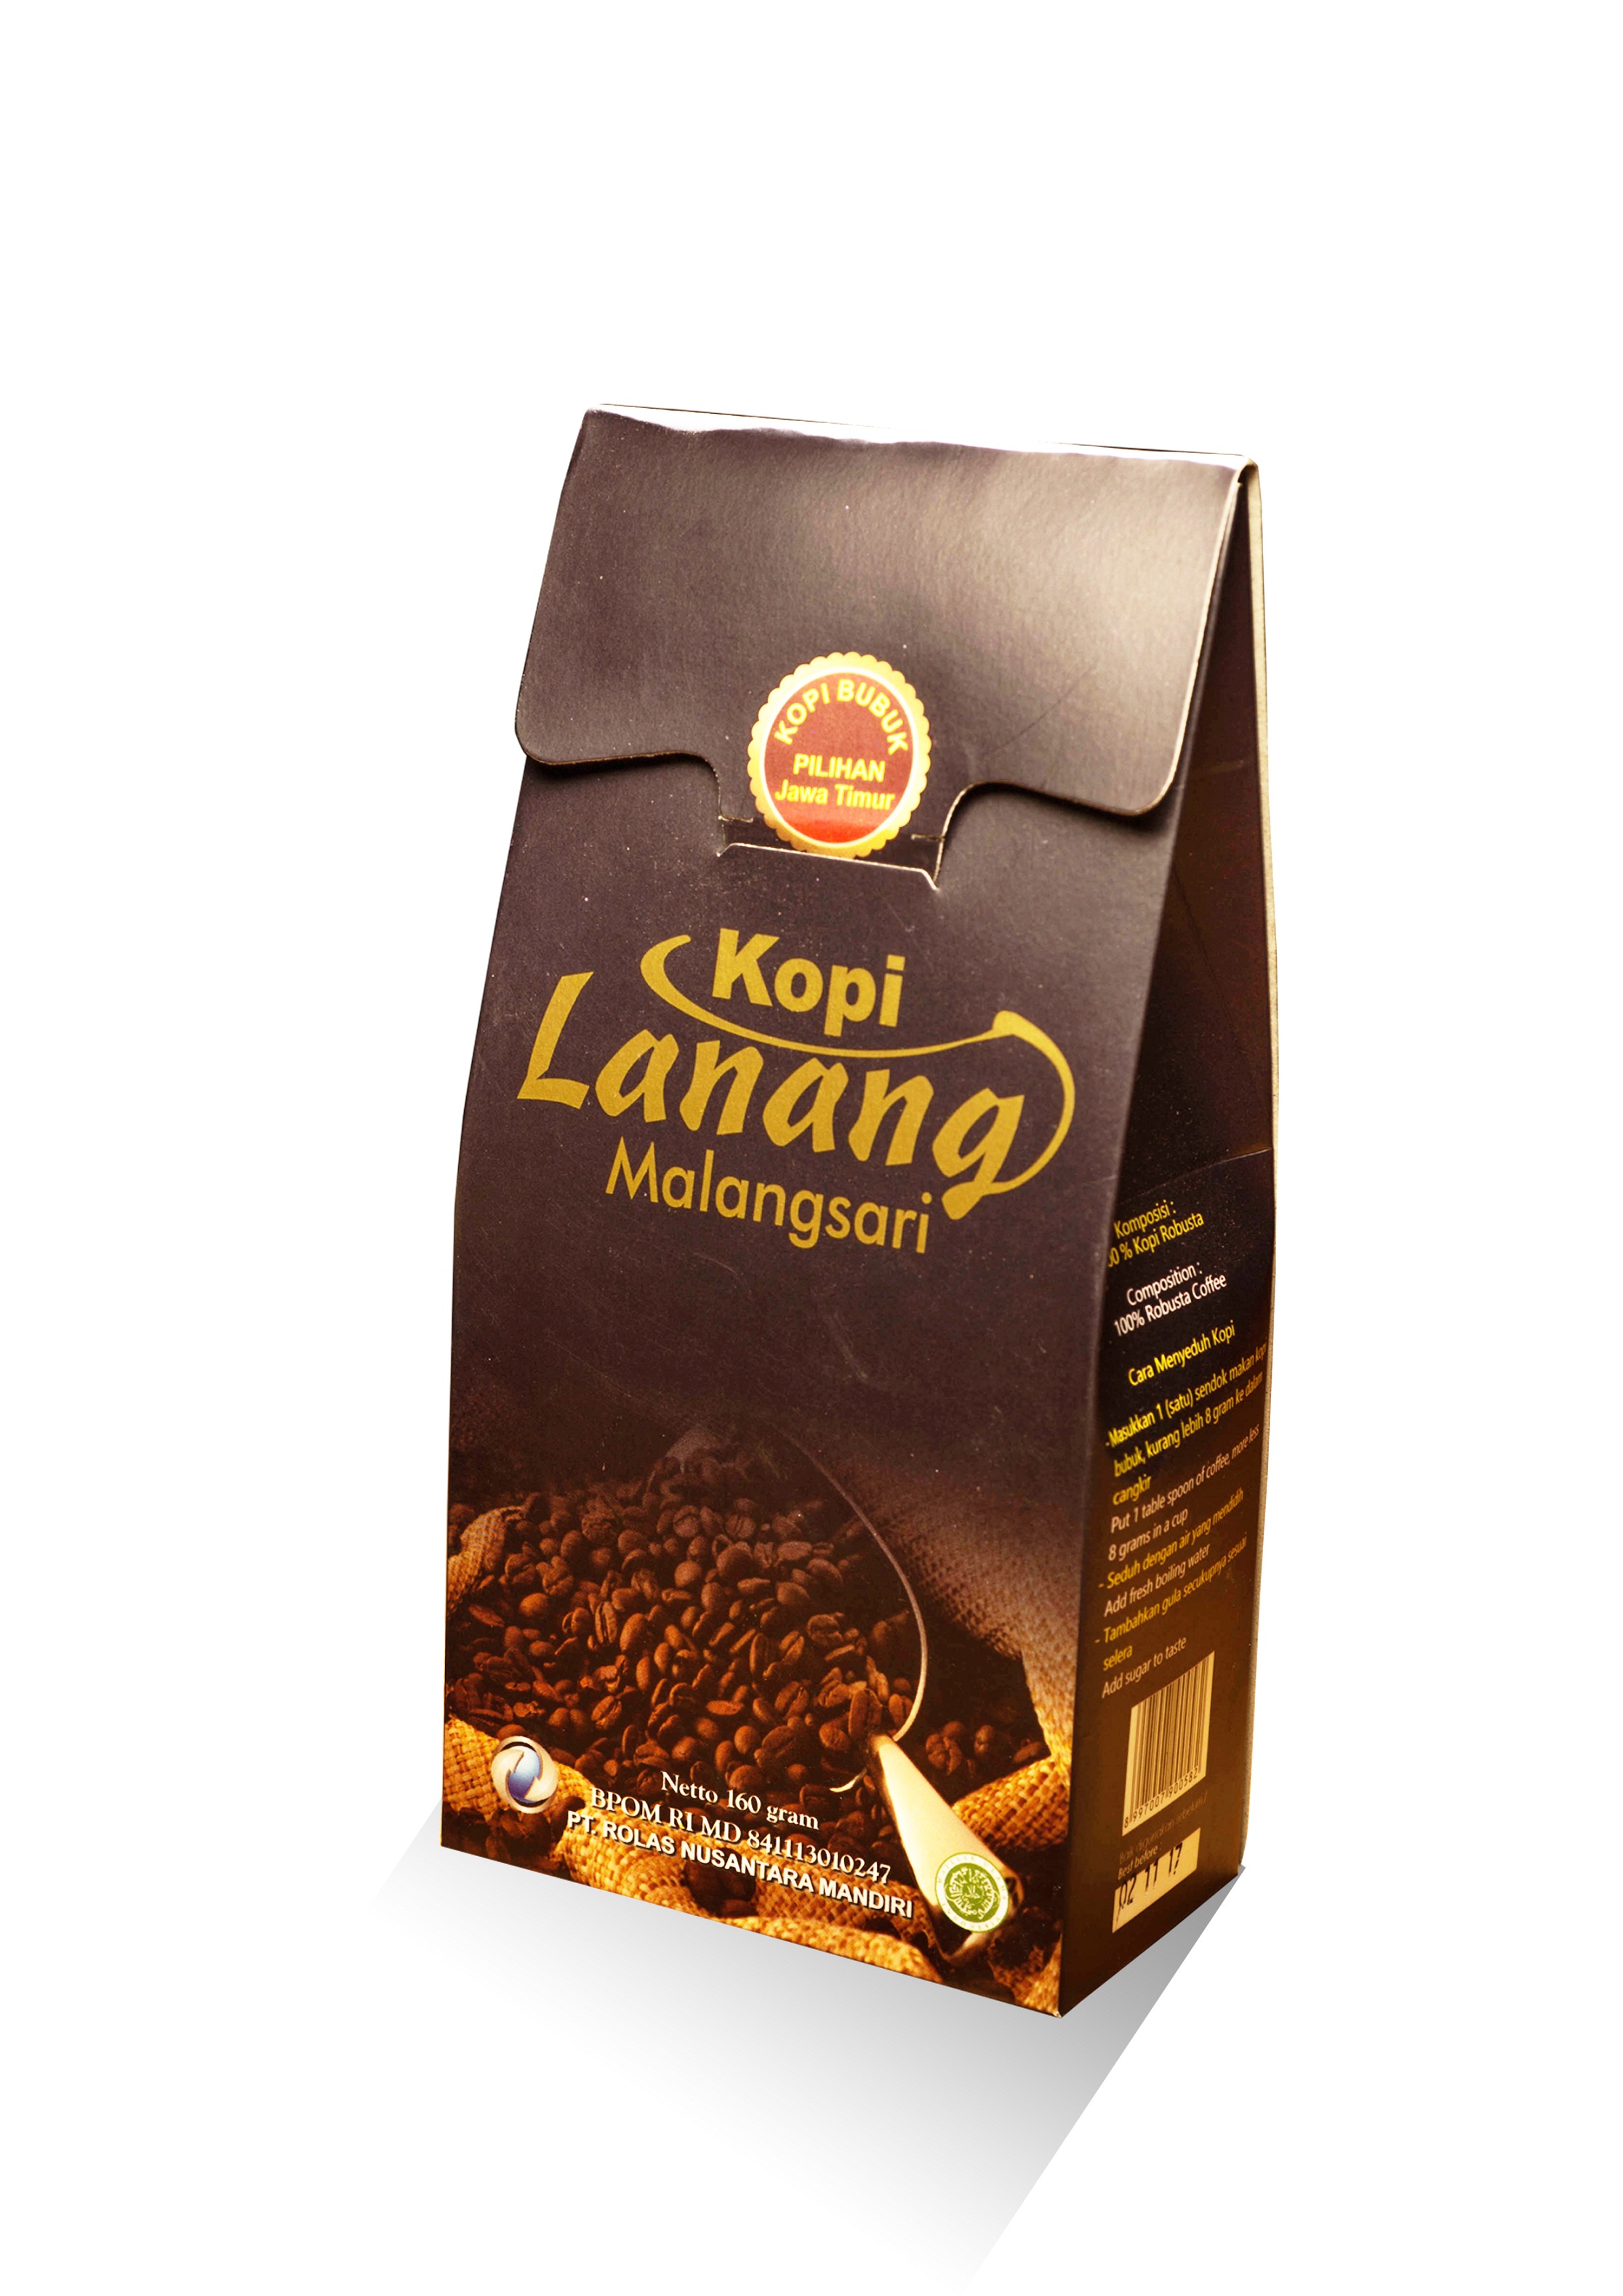 Warung Kopi Lanang - Coffee Shop Recommend!